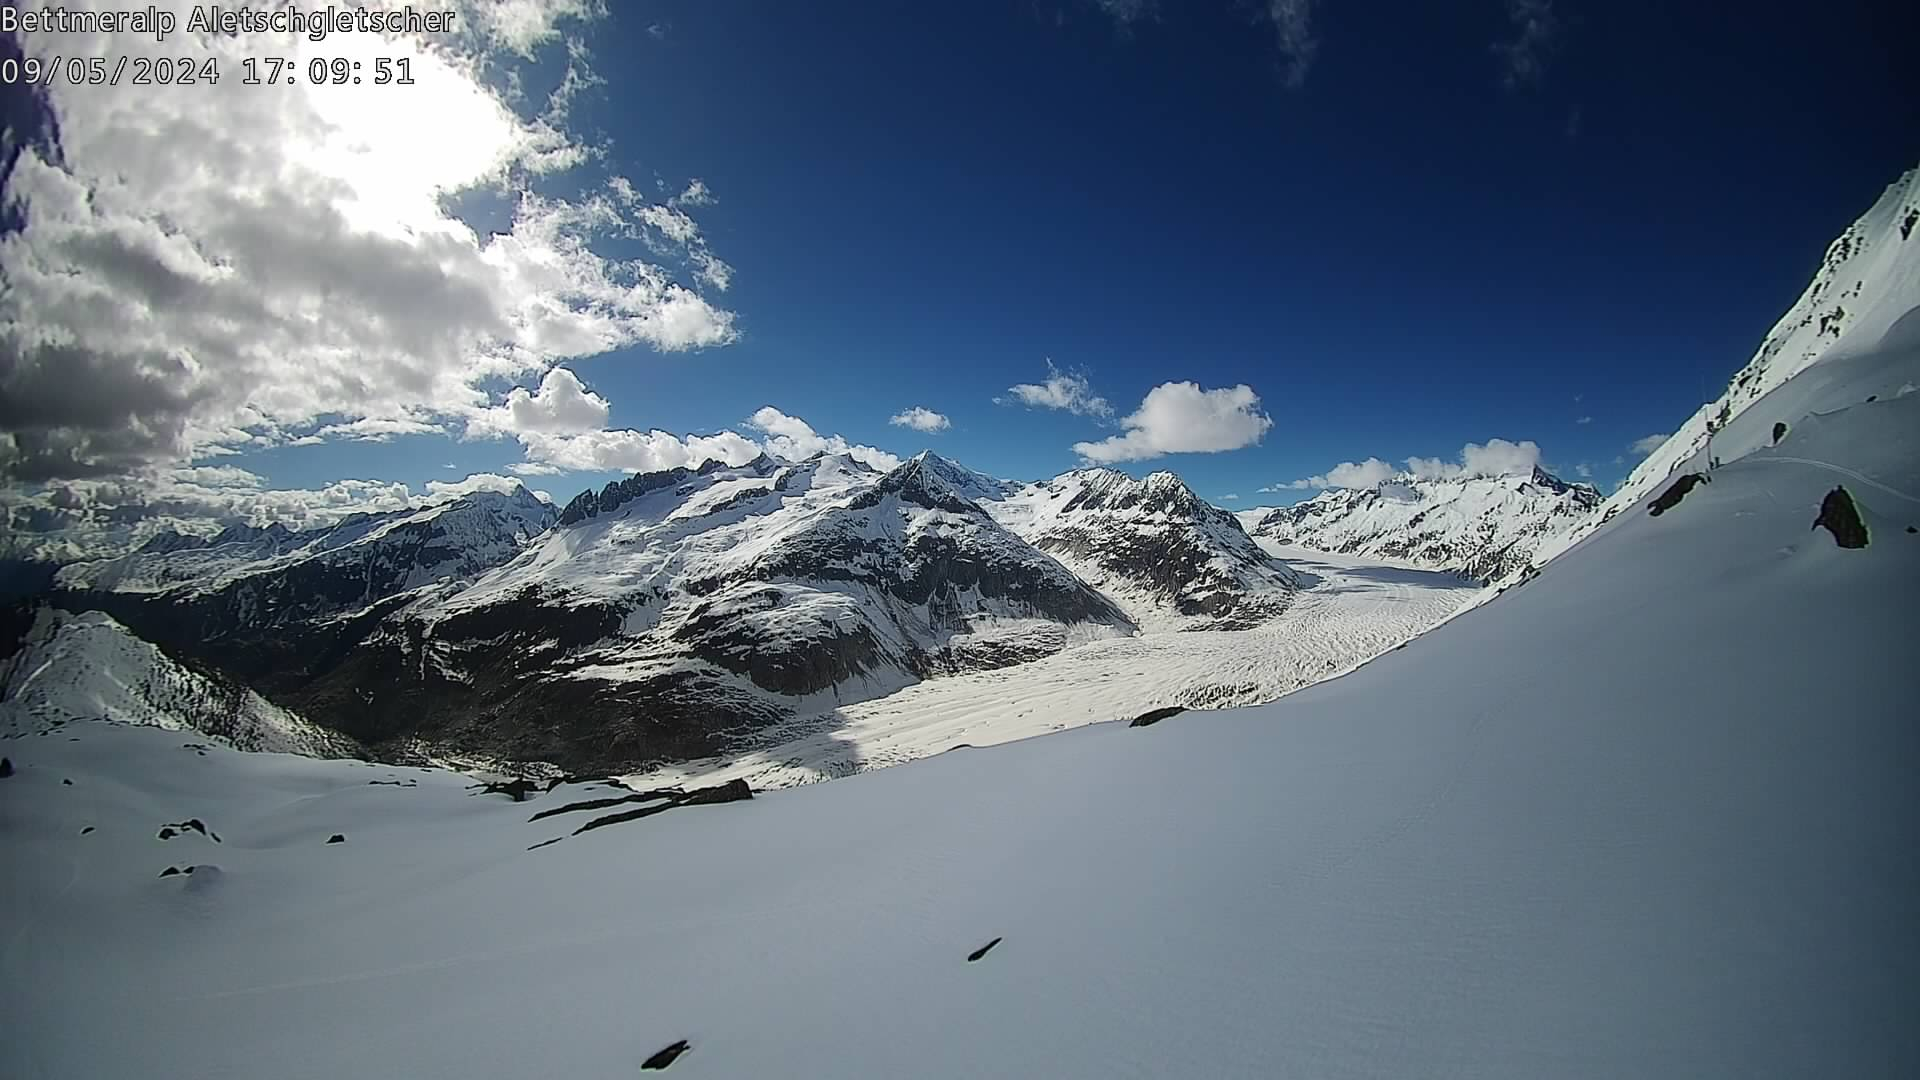 Aletsch Arena - Bettmeralp glacier webcam 2.647 m